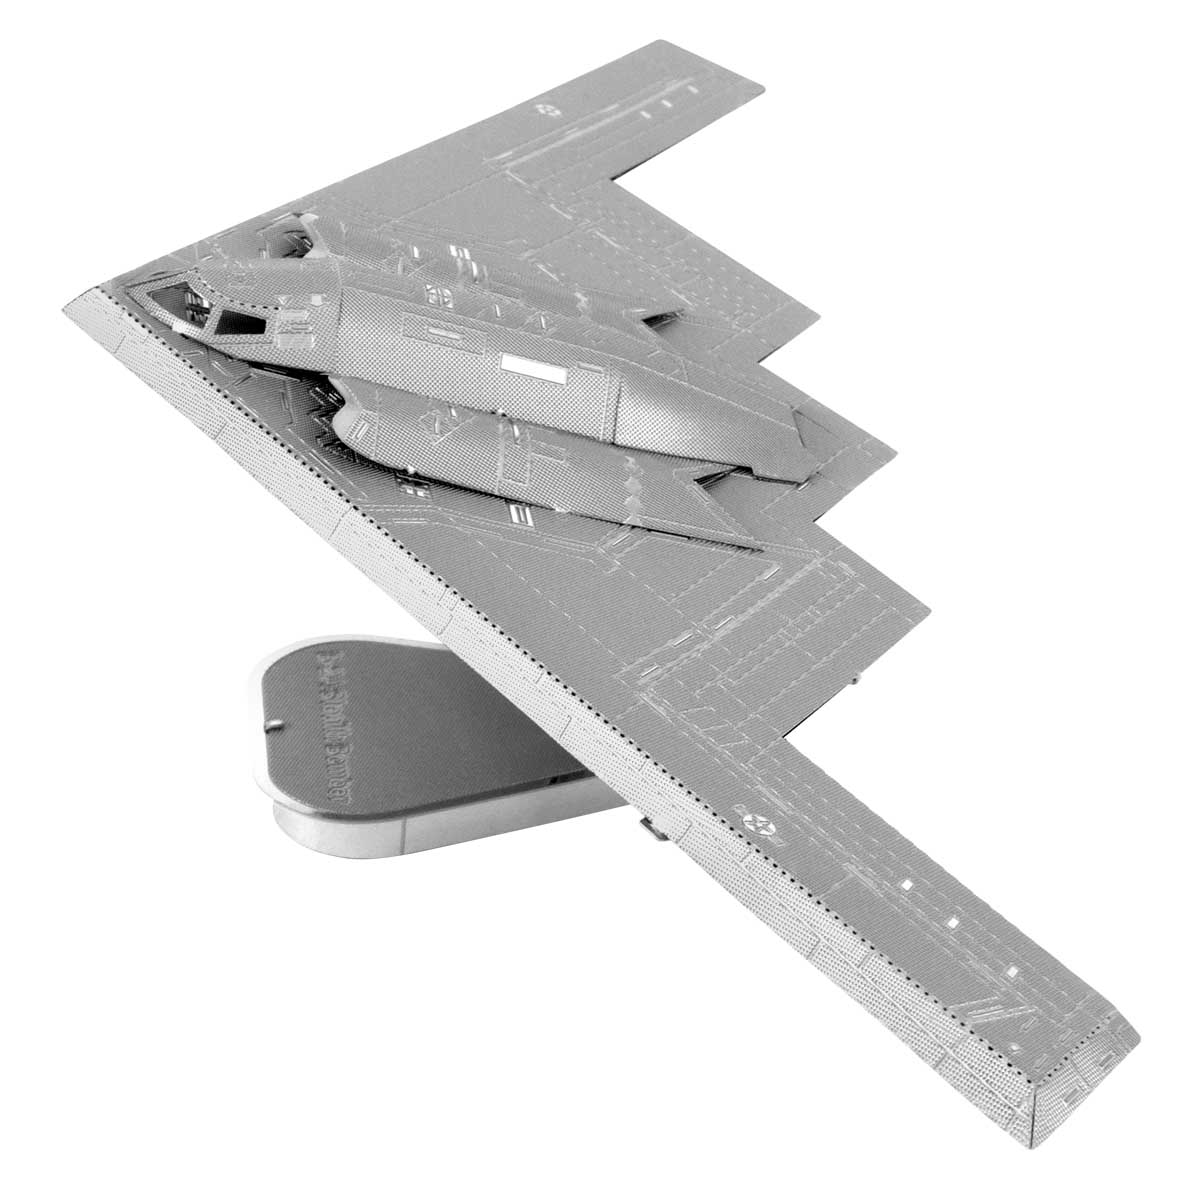 B-2A Spirit Plane Metal Puzzles